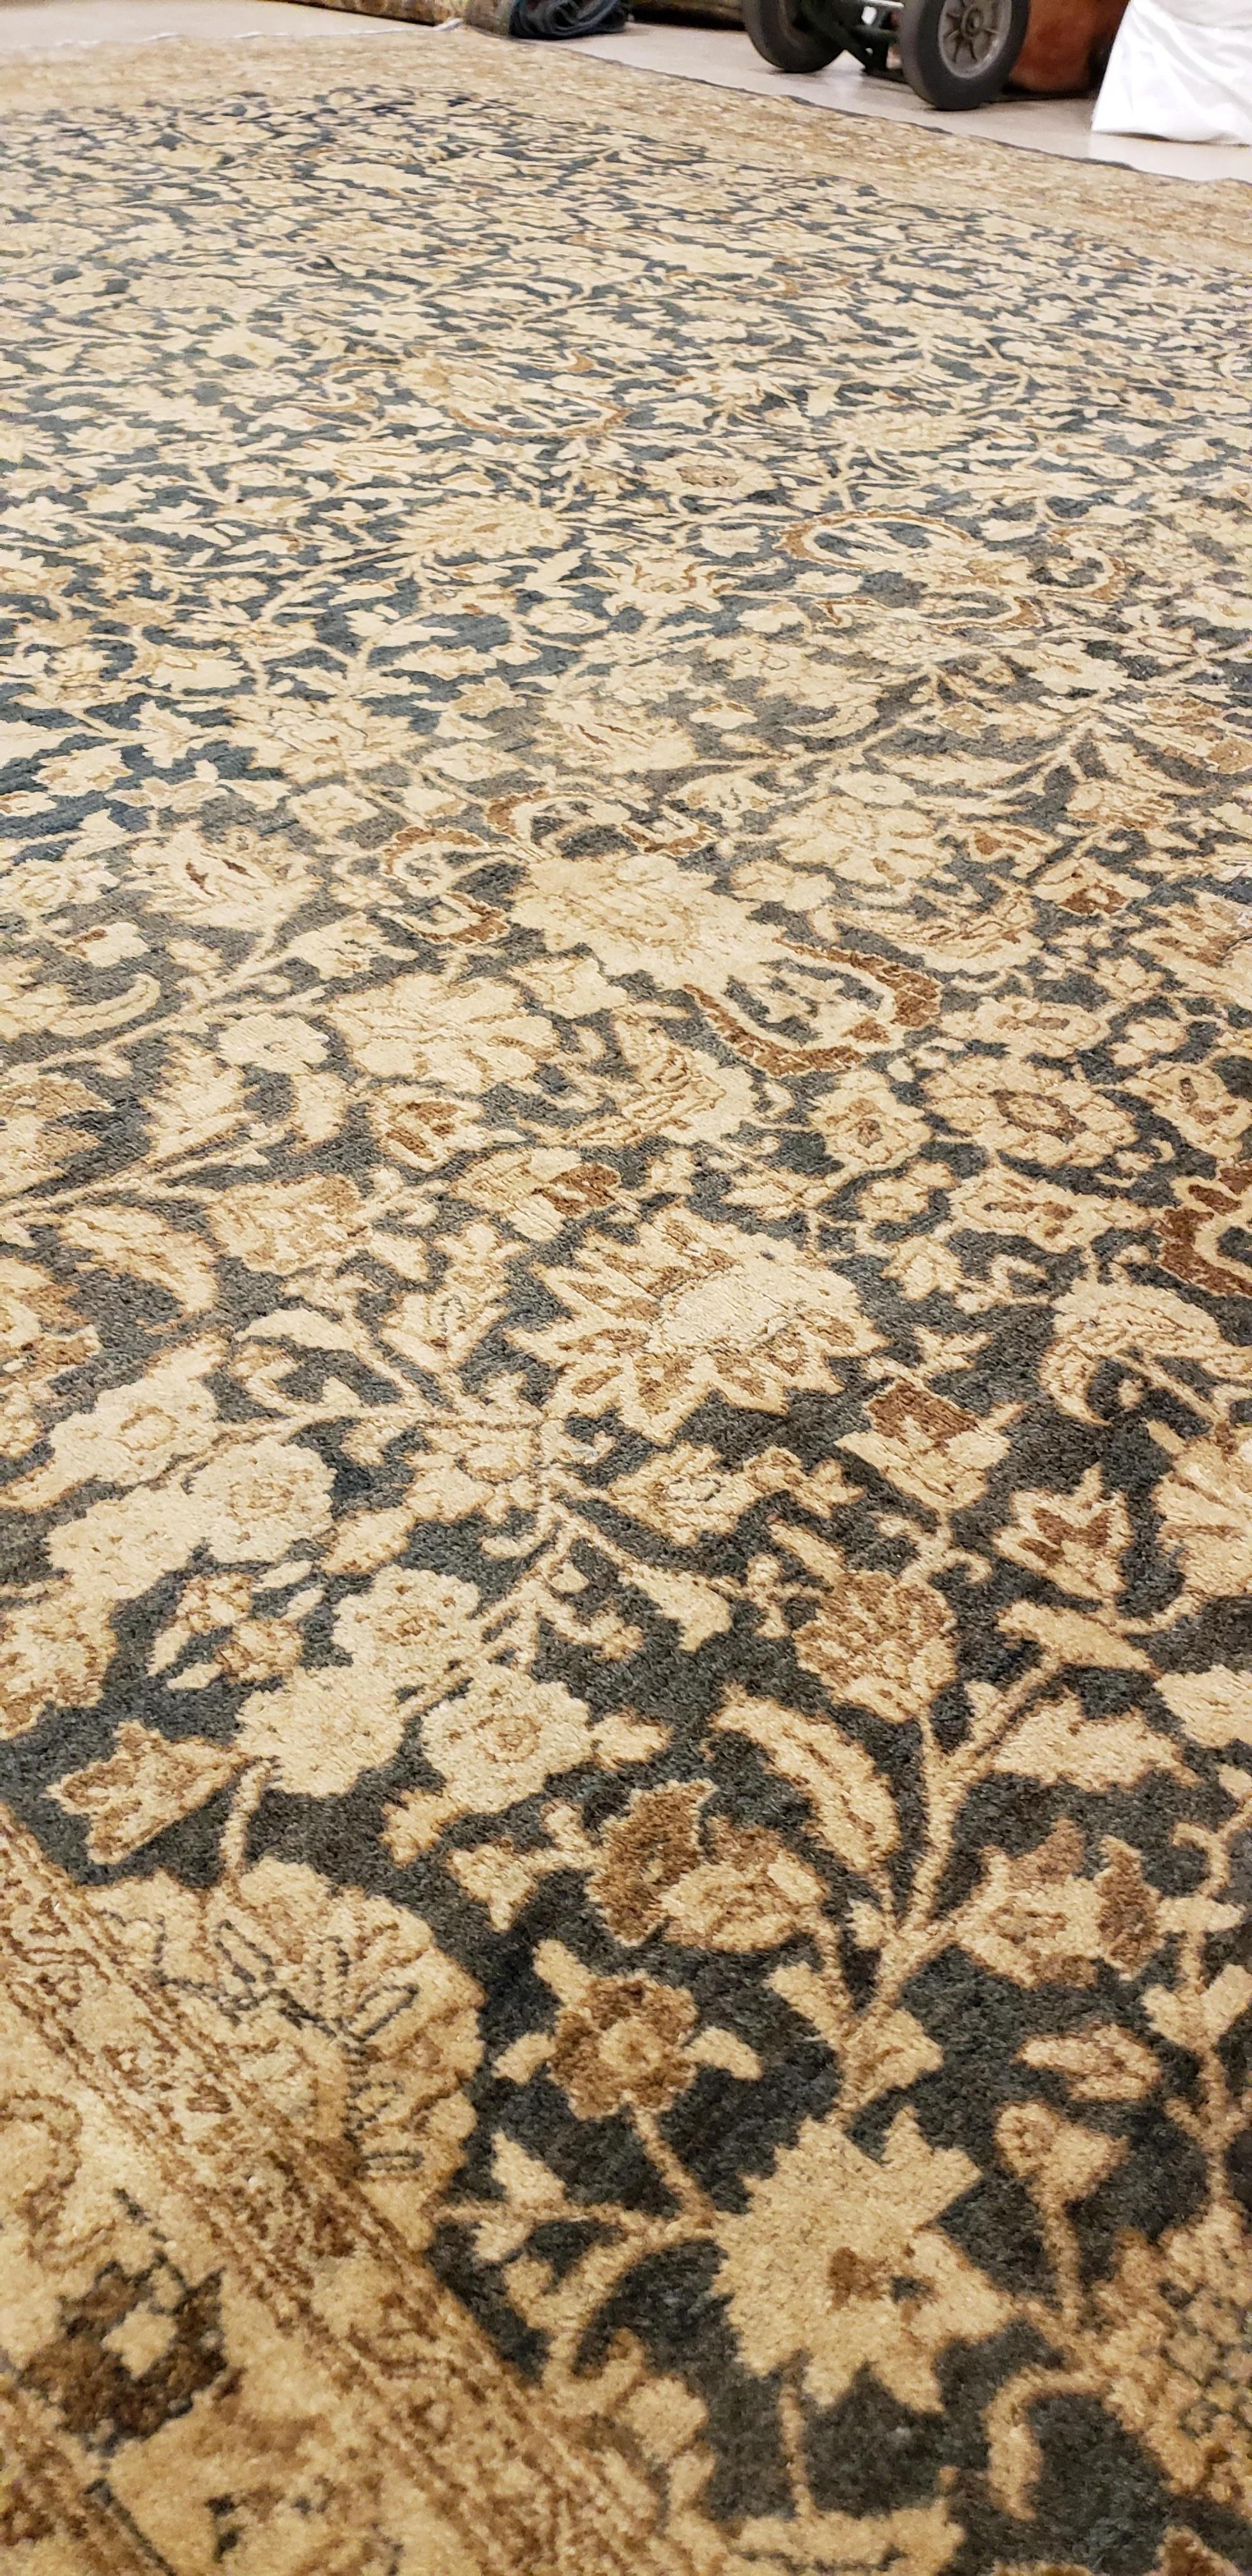 Antique Persian Tabriz Carpet, Handmade Oriental Rug, Beige, Gray/Blue, Taupe 1